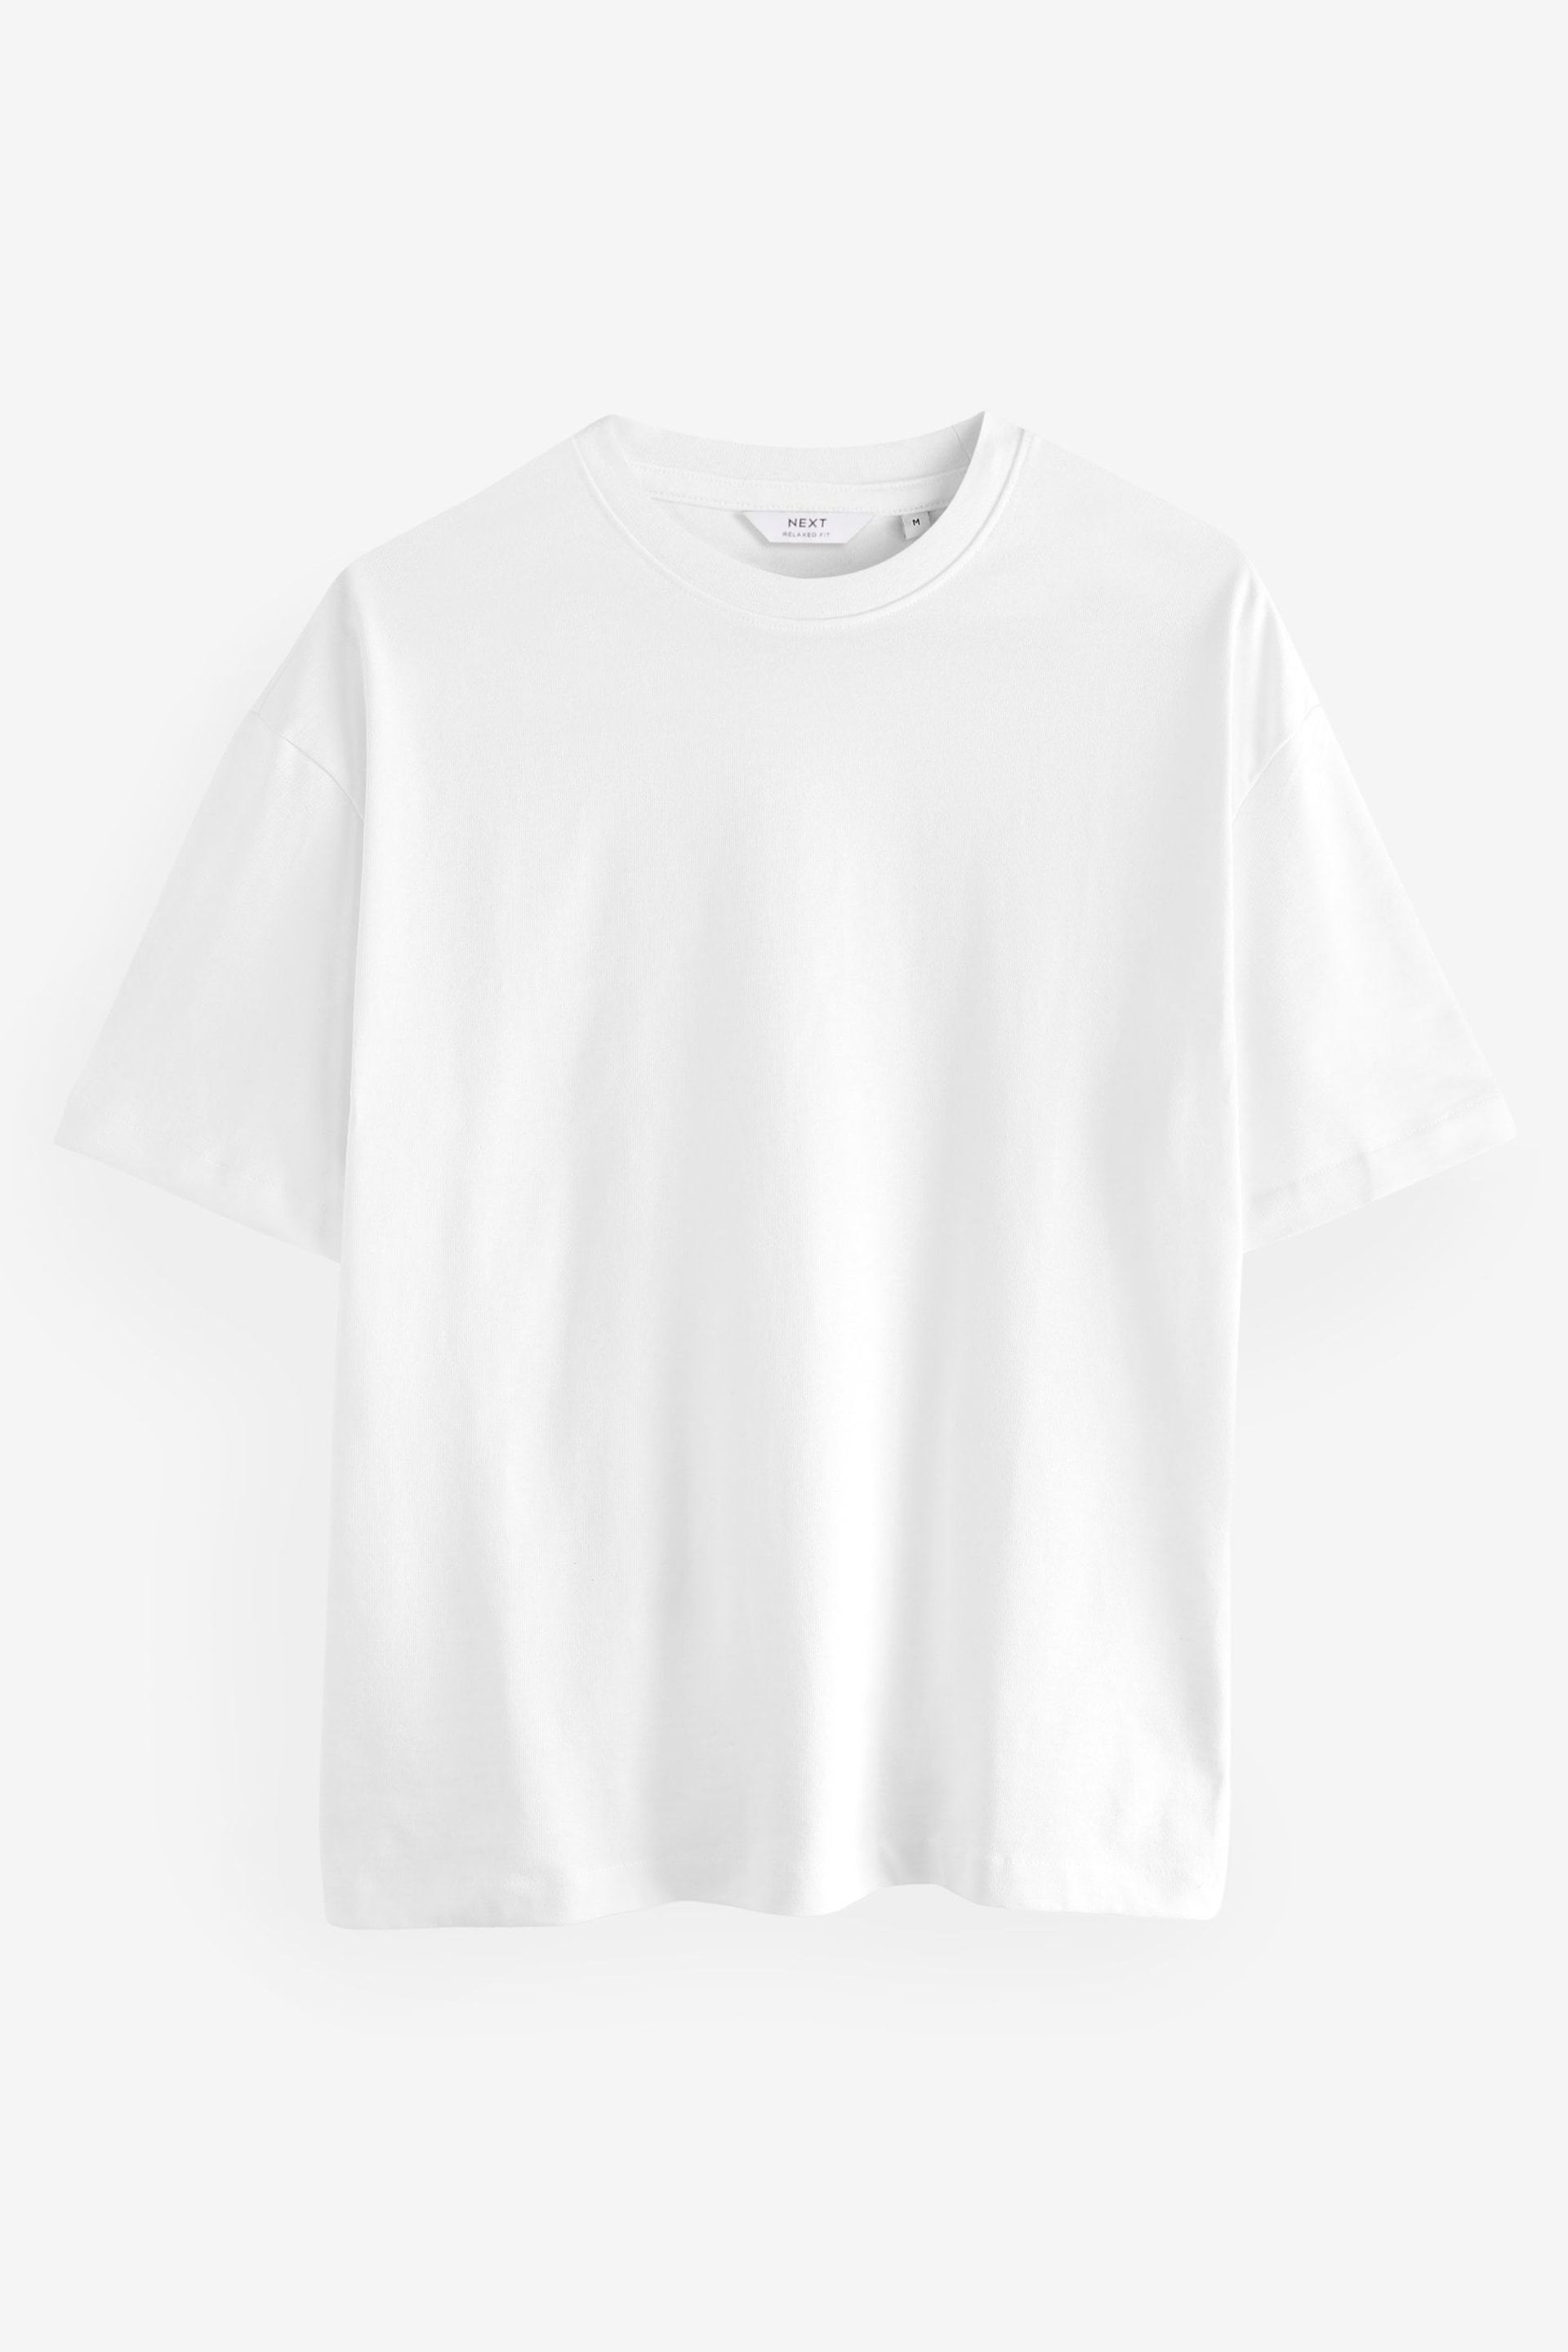 Black/White/Navy/Stone/Grey Heavyweight T-Shirts 5 Pack - Image 6 of 6